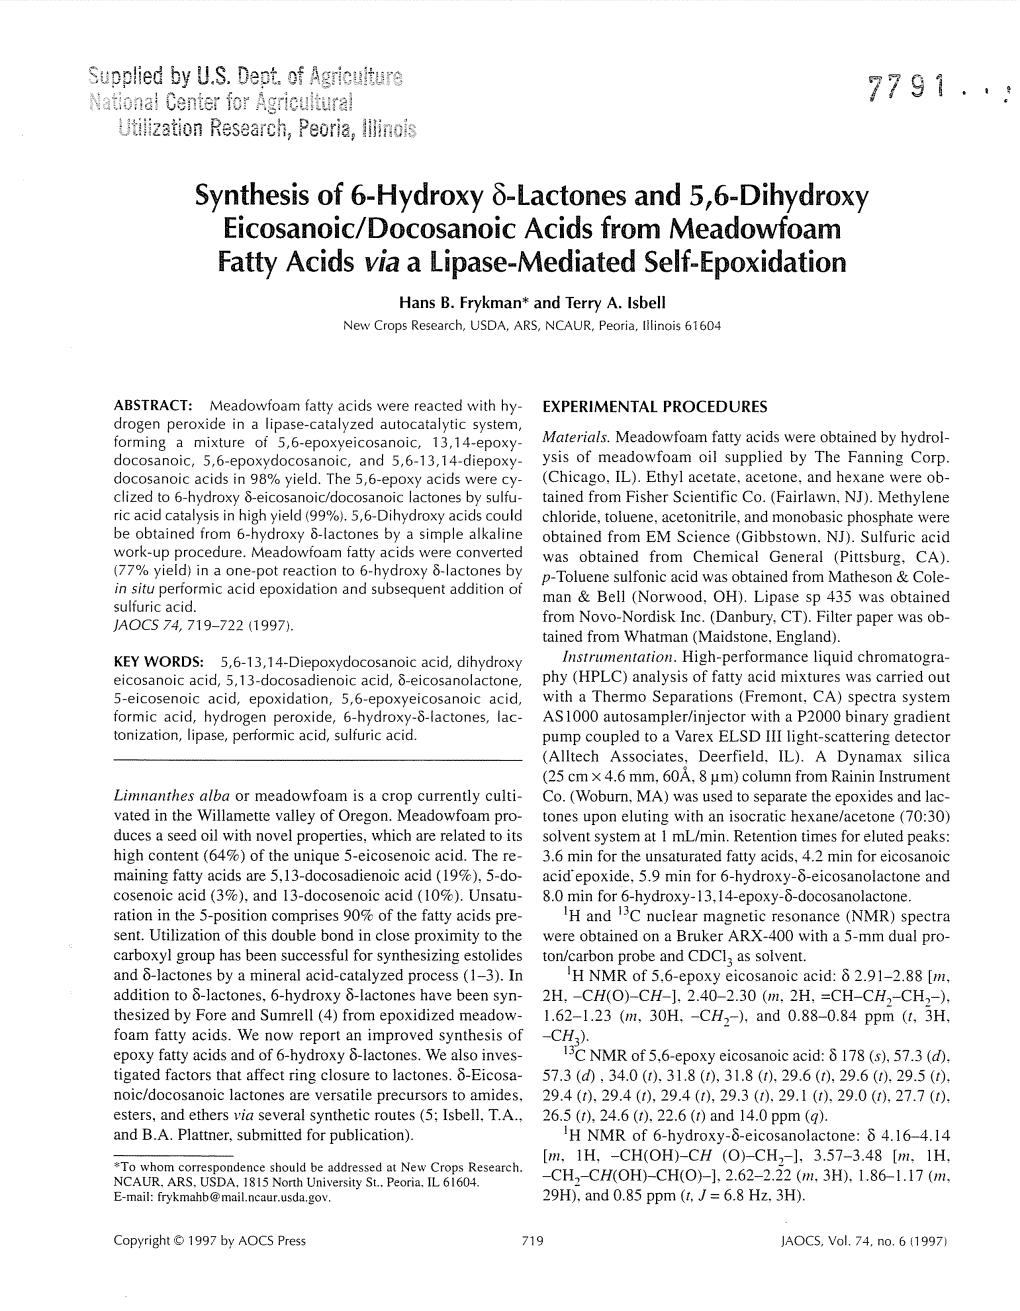 Synthesis of 6-Hydroxy B-Lactones and 5,6-Dihydroxy Eicosanoic/Docosanoic Acids from Meadowfoam Fatty Acids Via a Lipase-Mediated Self-Epoxidation